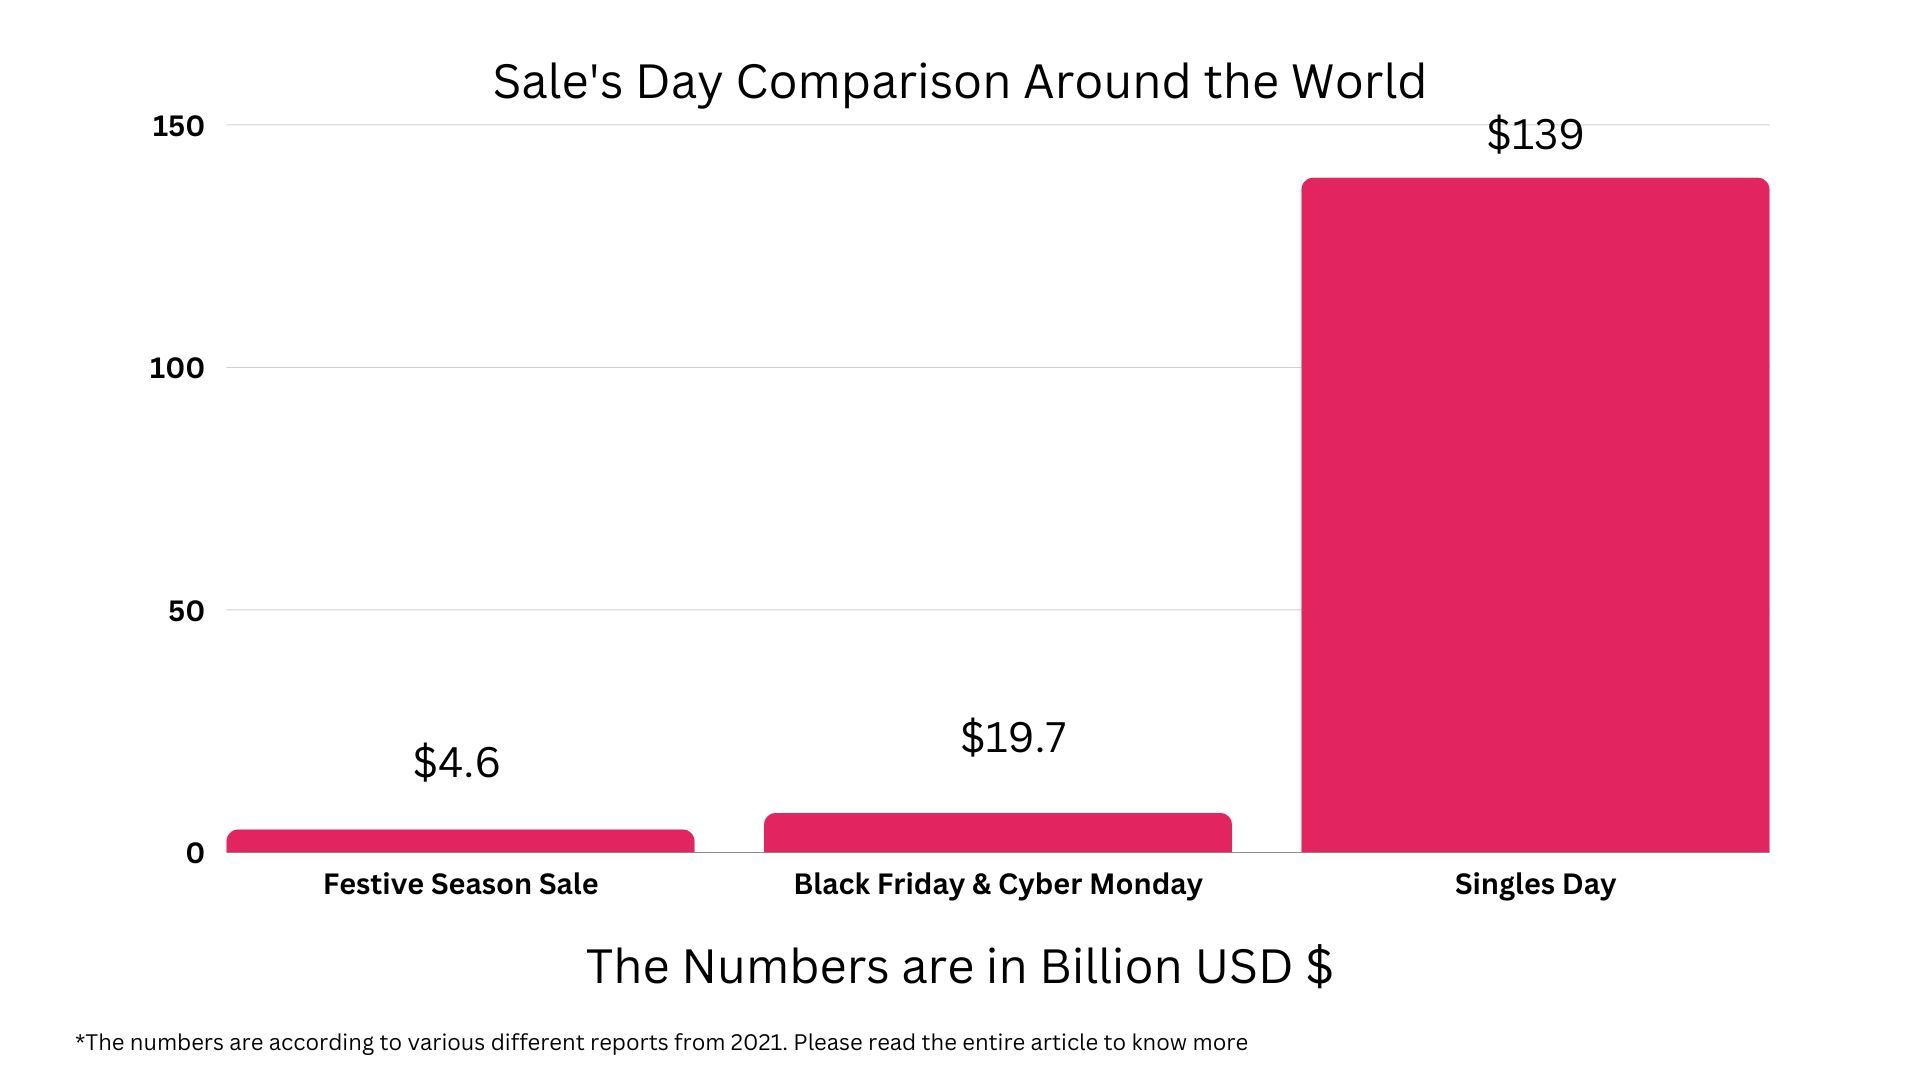 Biggest Sales Around the World - Singles Day Vs Black Friday Vs